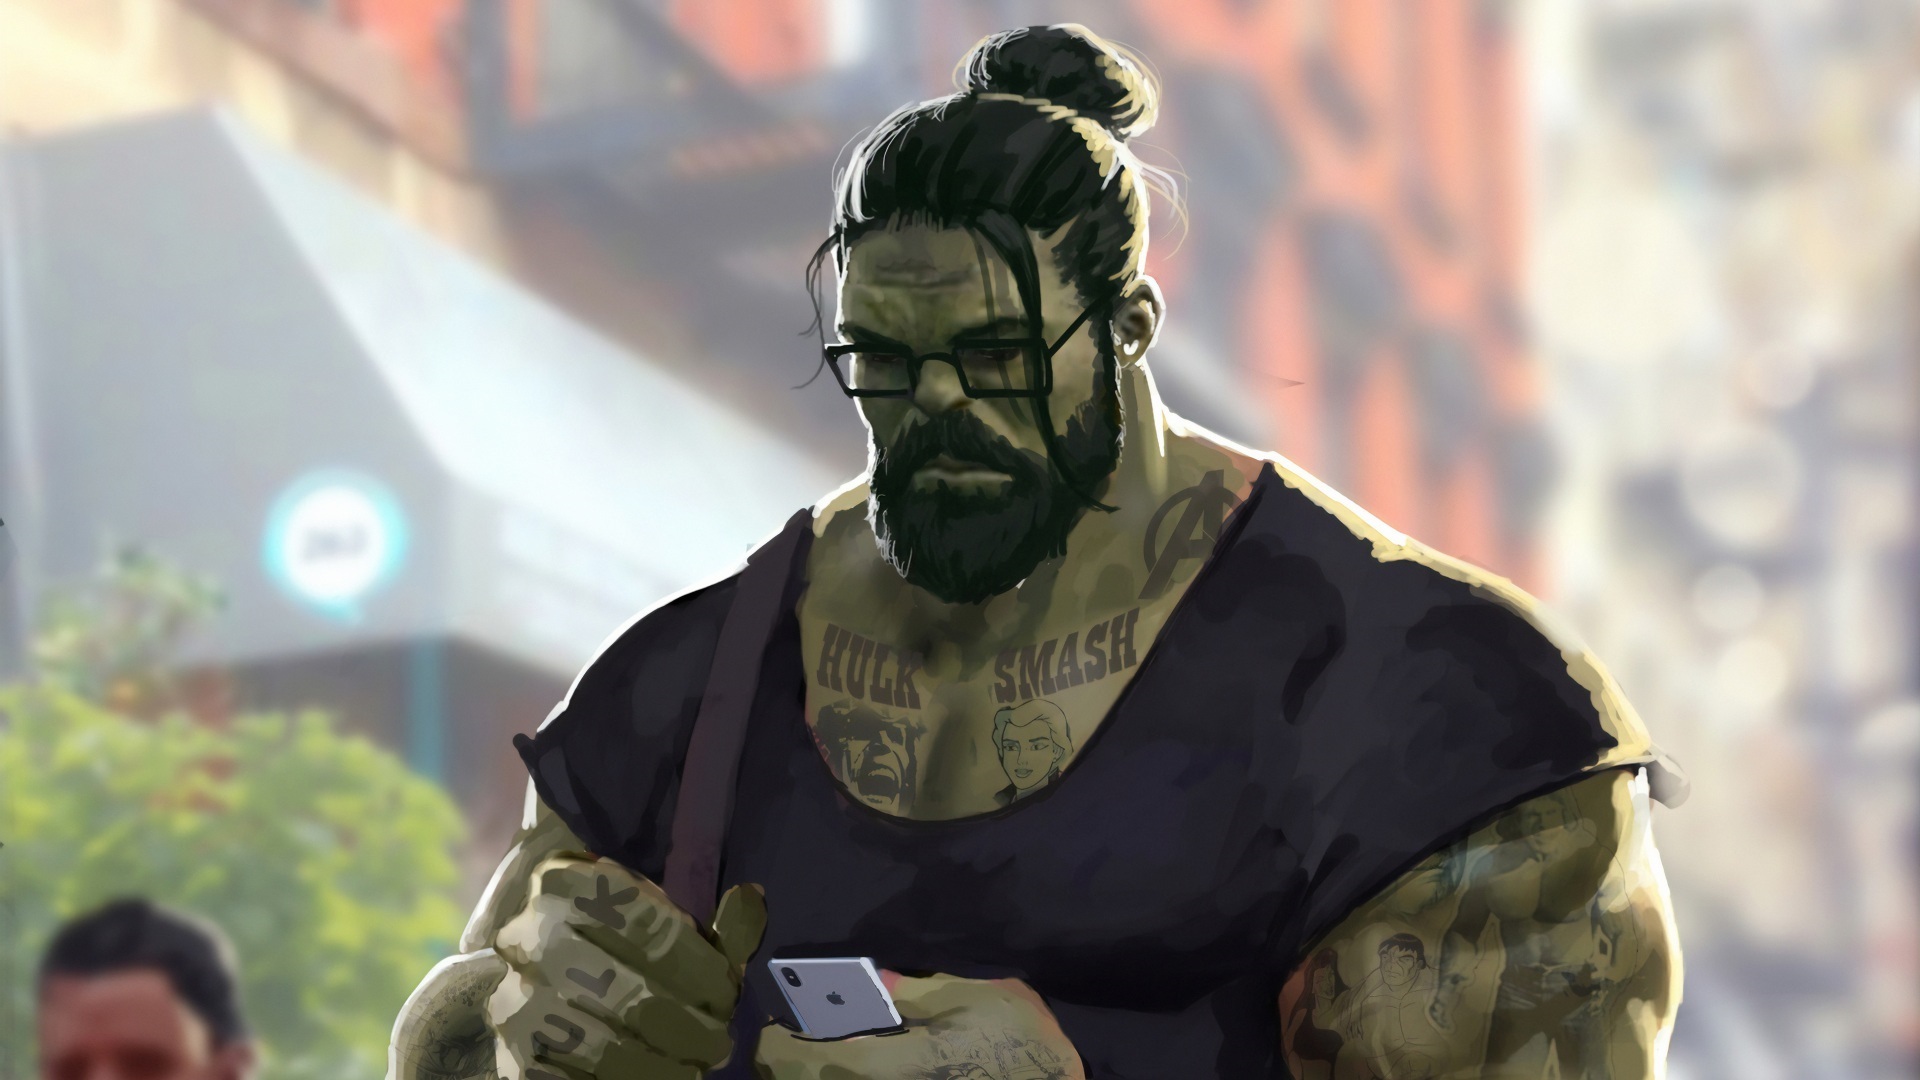 General 1920x1080 Hulk Marvel Comics hairbun glasses tattoo smartphone Apple Inc. iPhone beard The Avengers